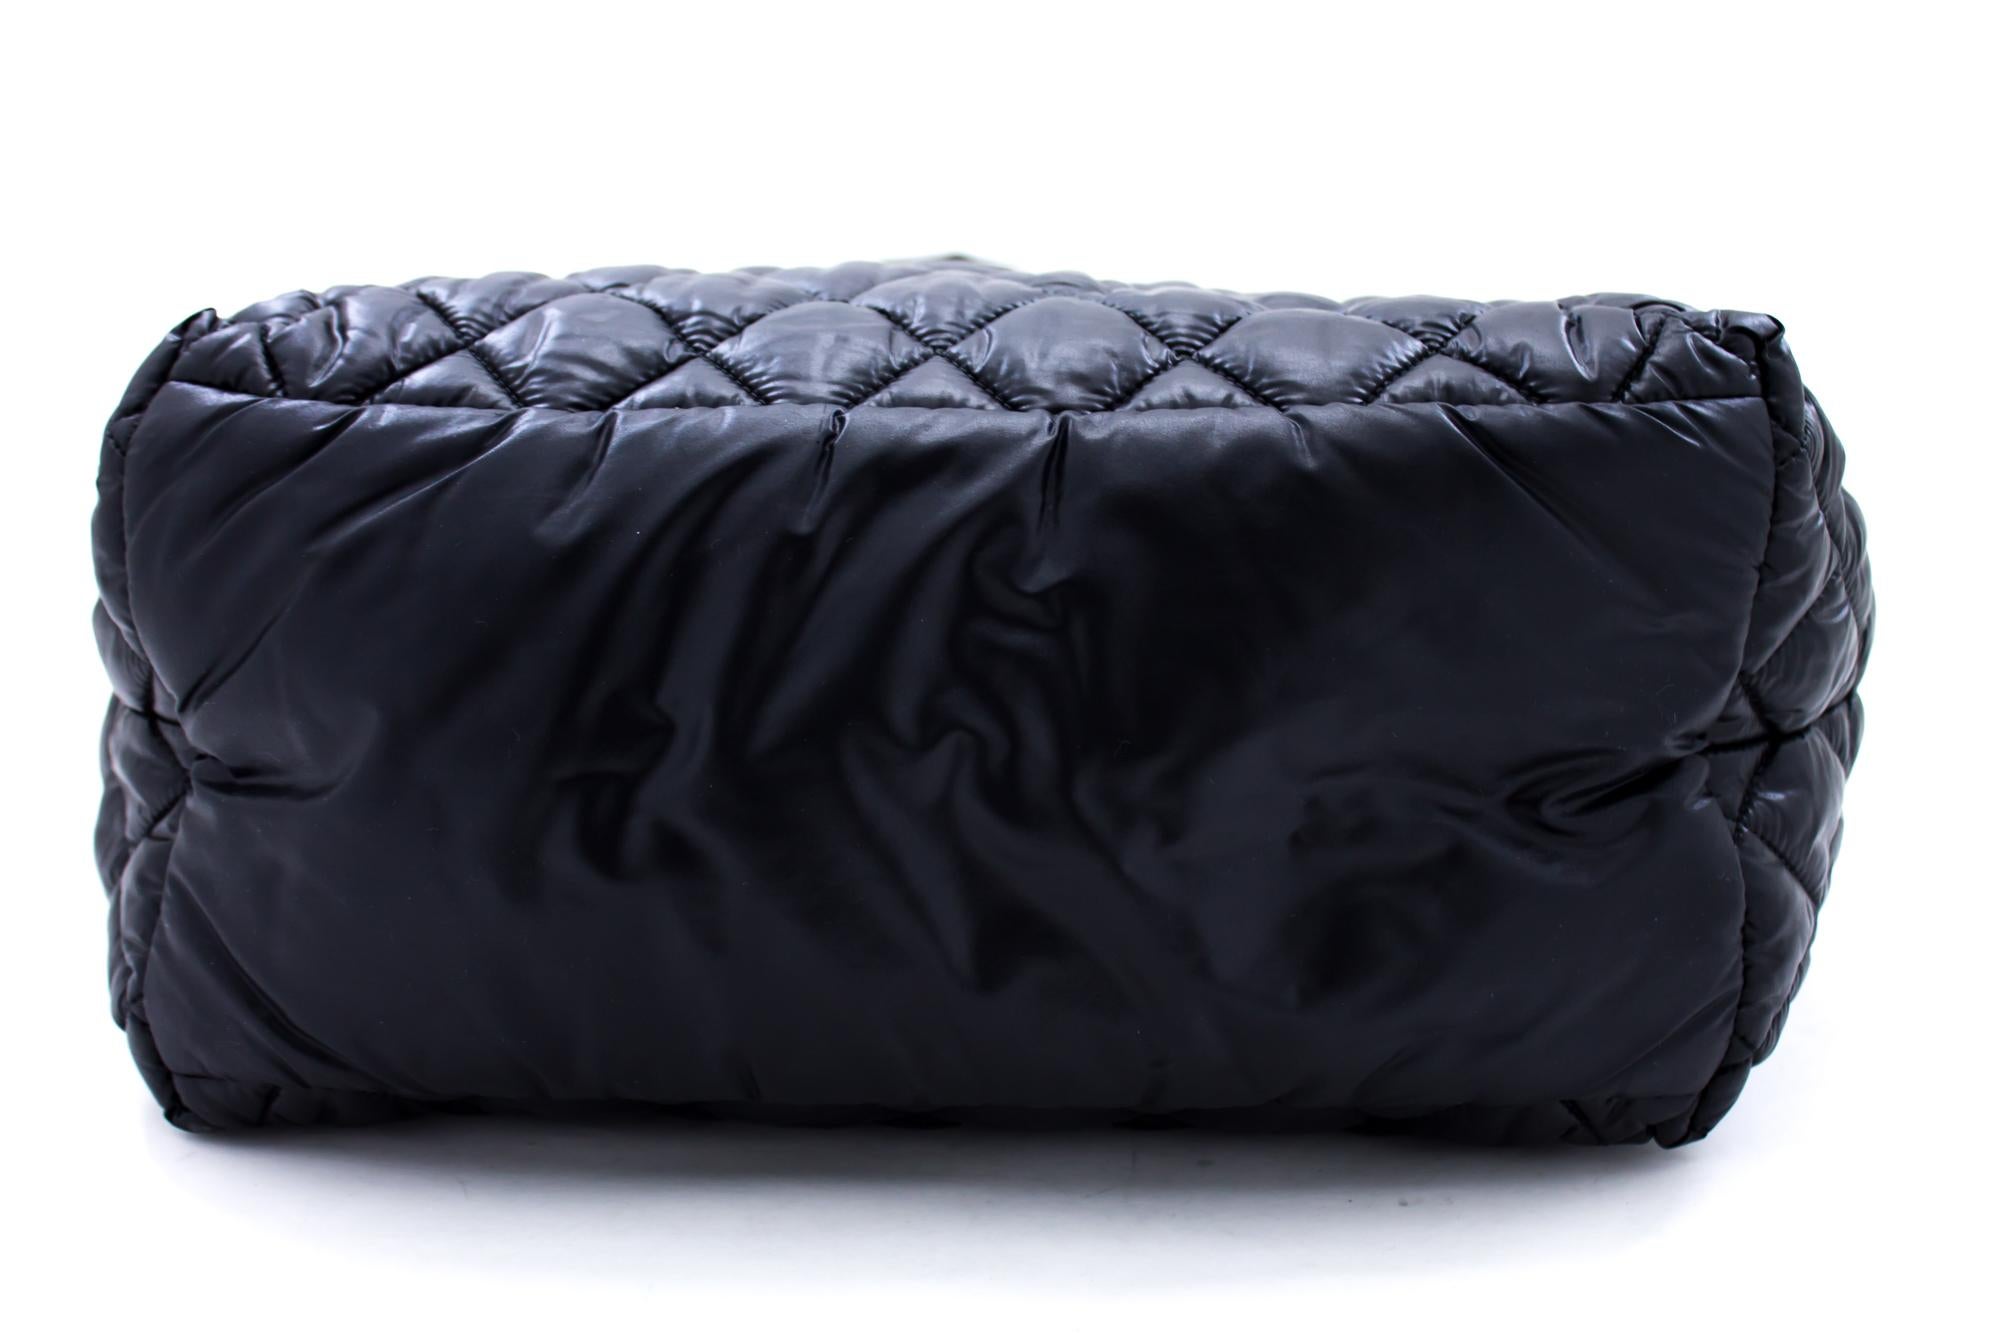 Women's CHANEL Coco Cocoon Nylon Tote Bag Handbag Black Bordeaux Leather